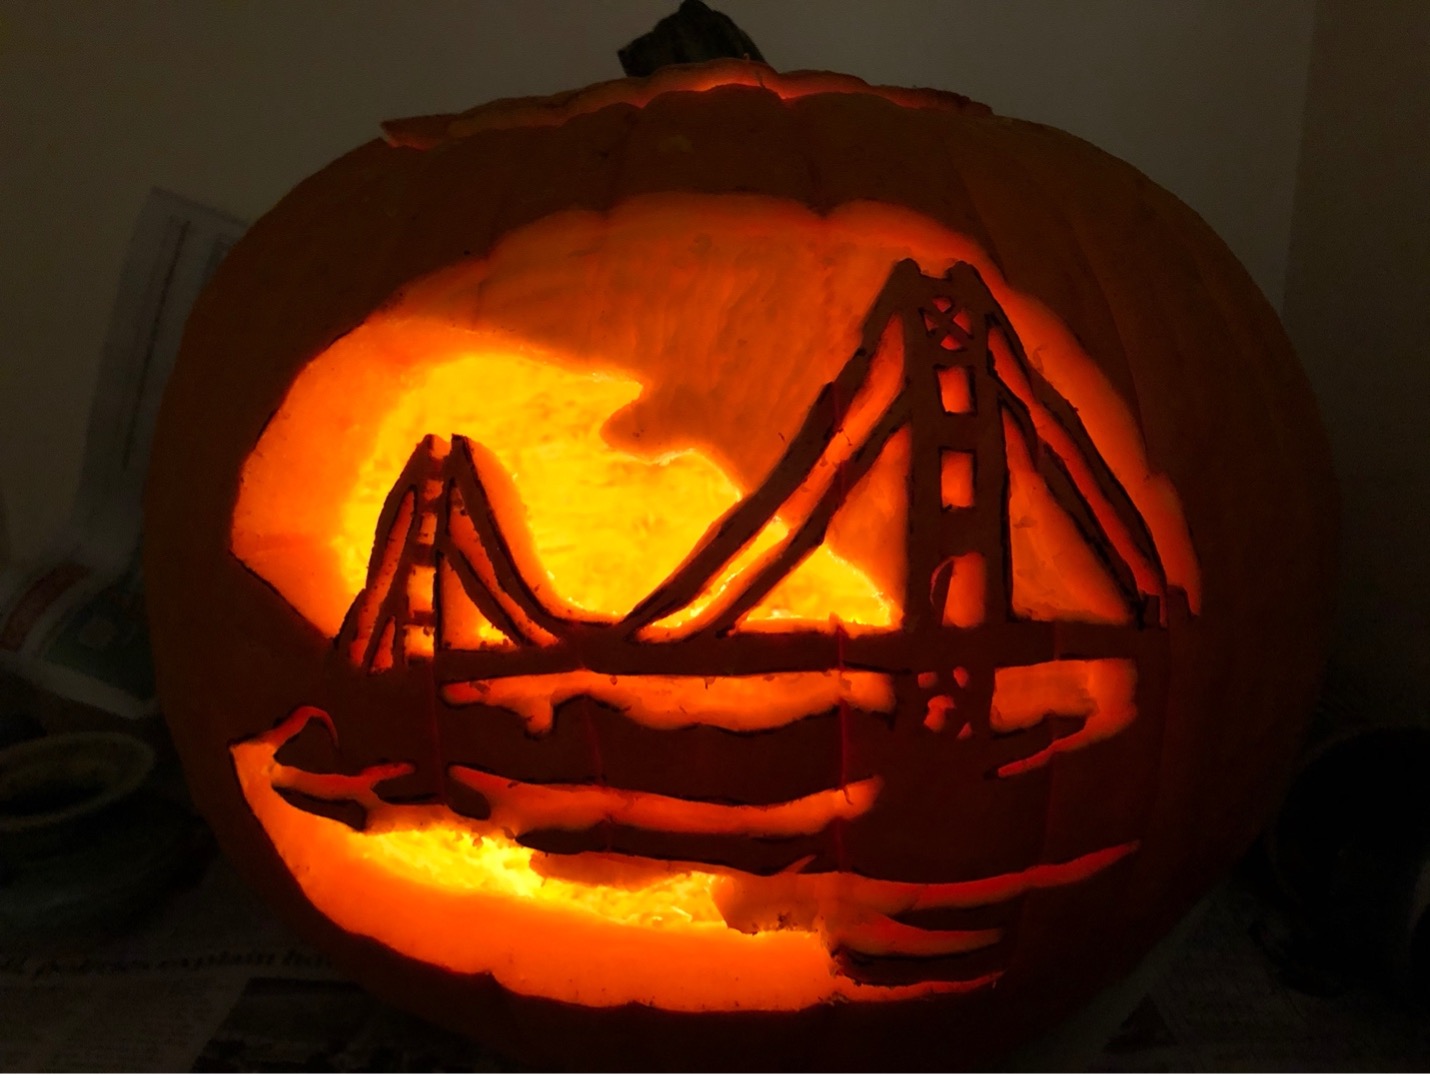 A carved pumpkin depicting the Golden Gate bridge.